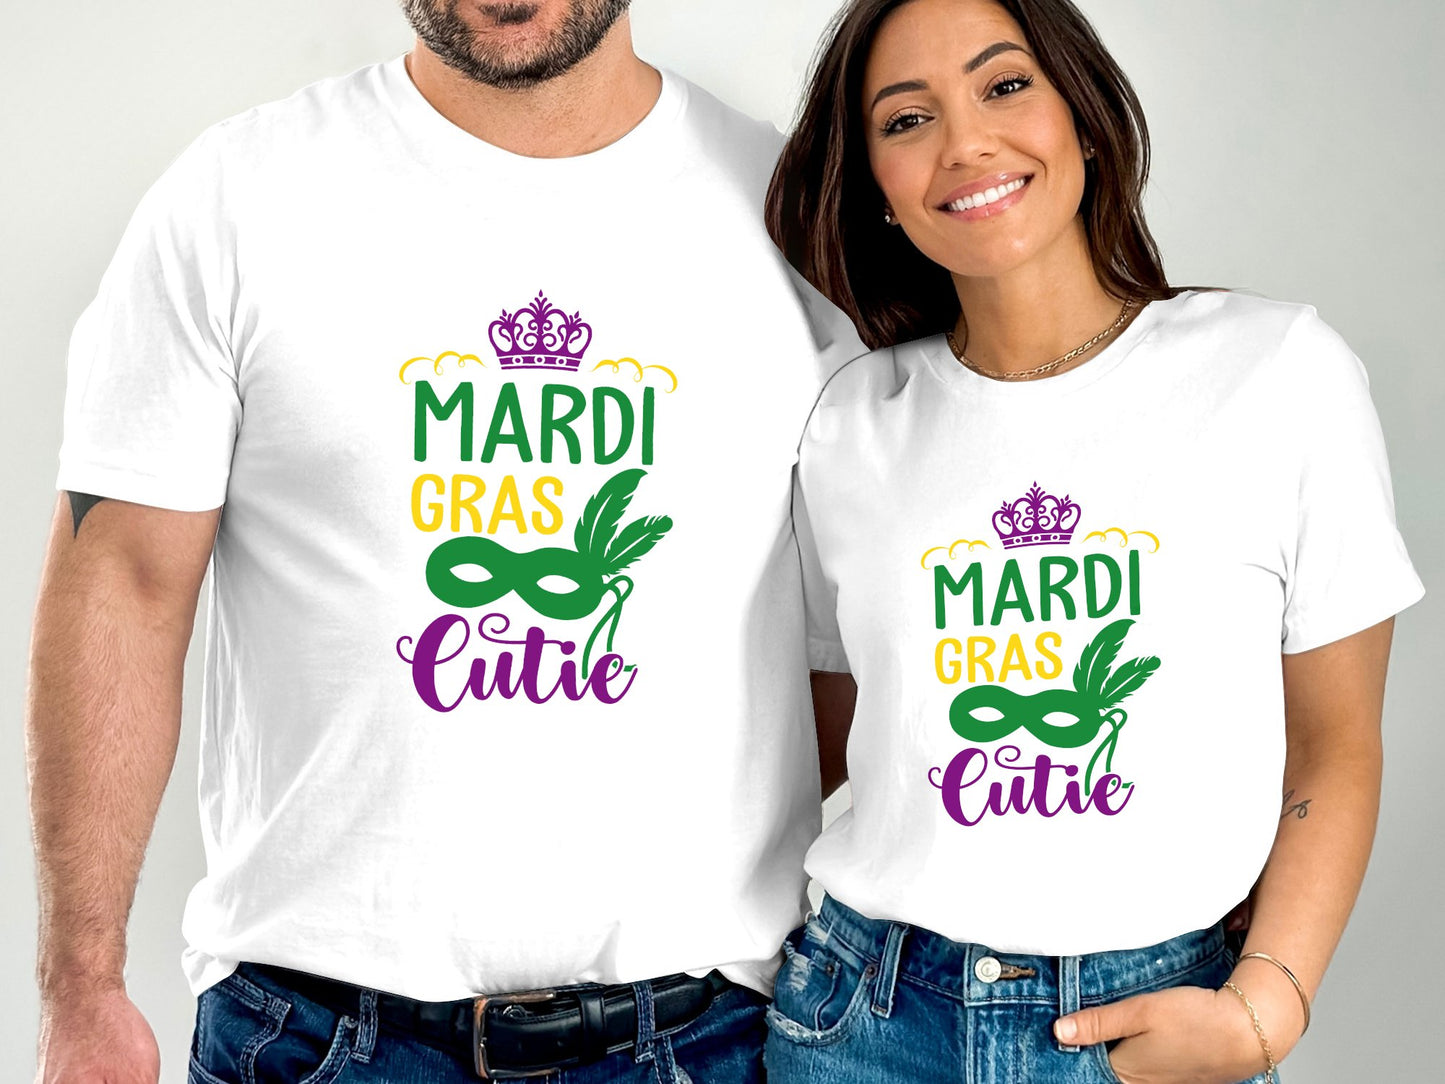 Mardi Gras Cutie T-shirt